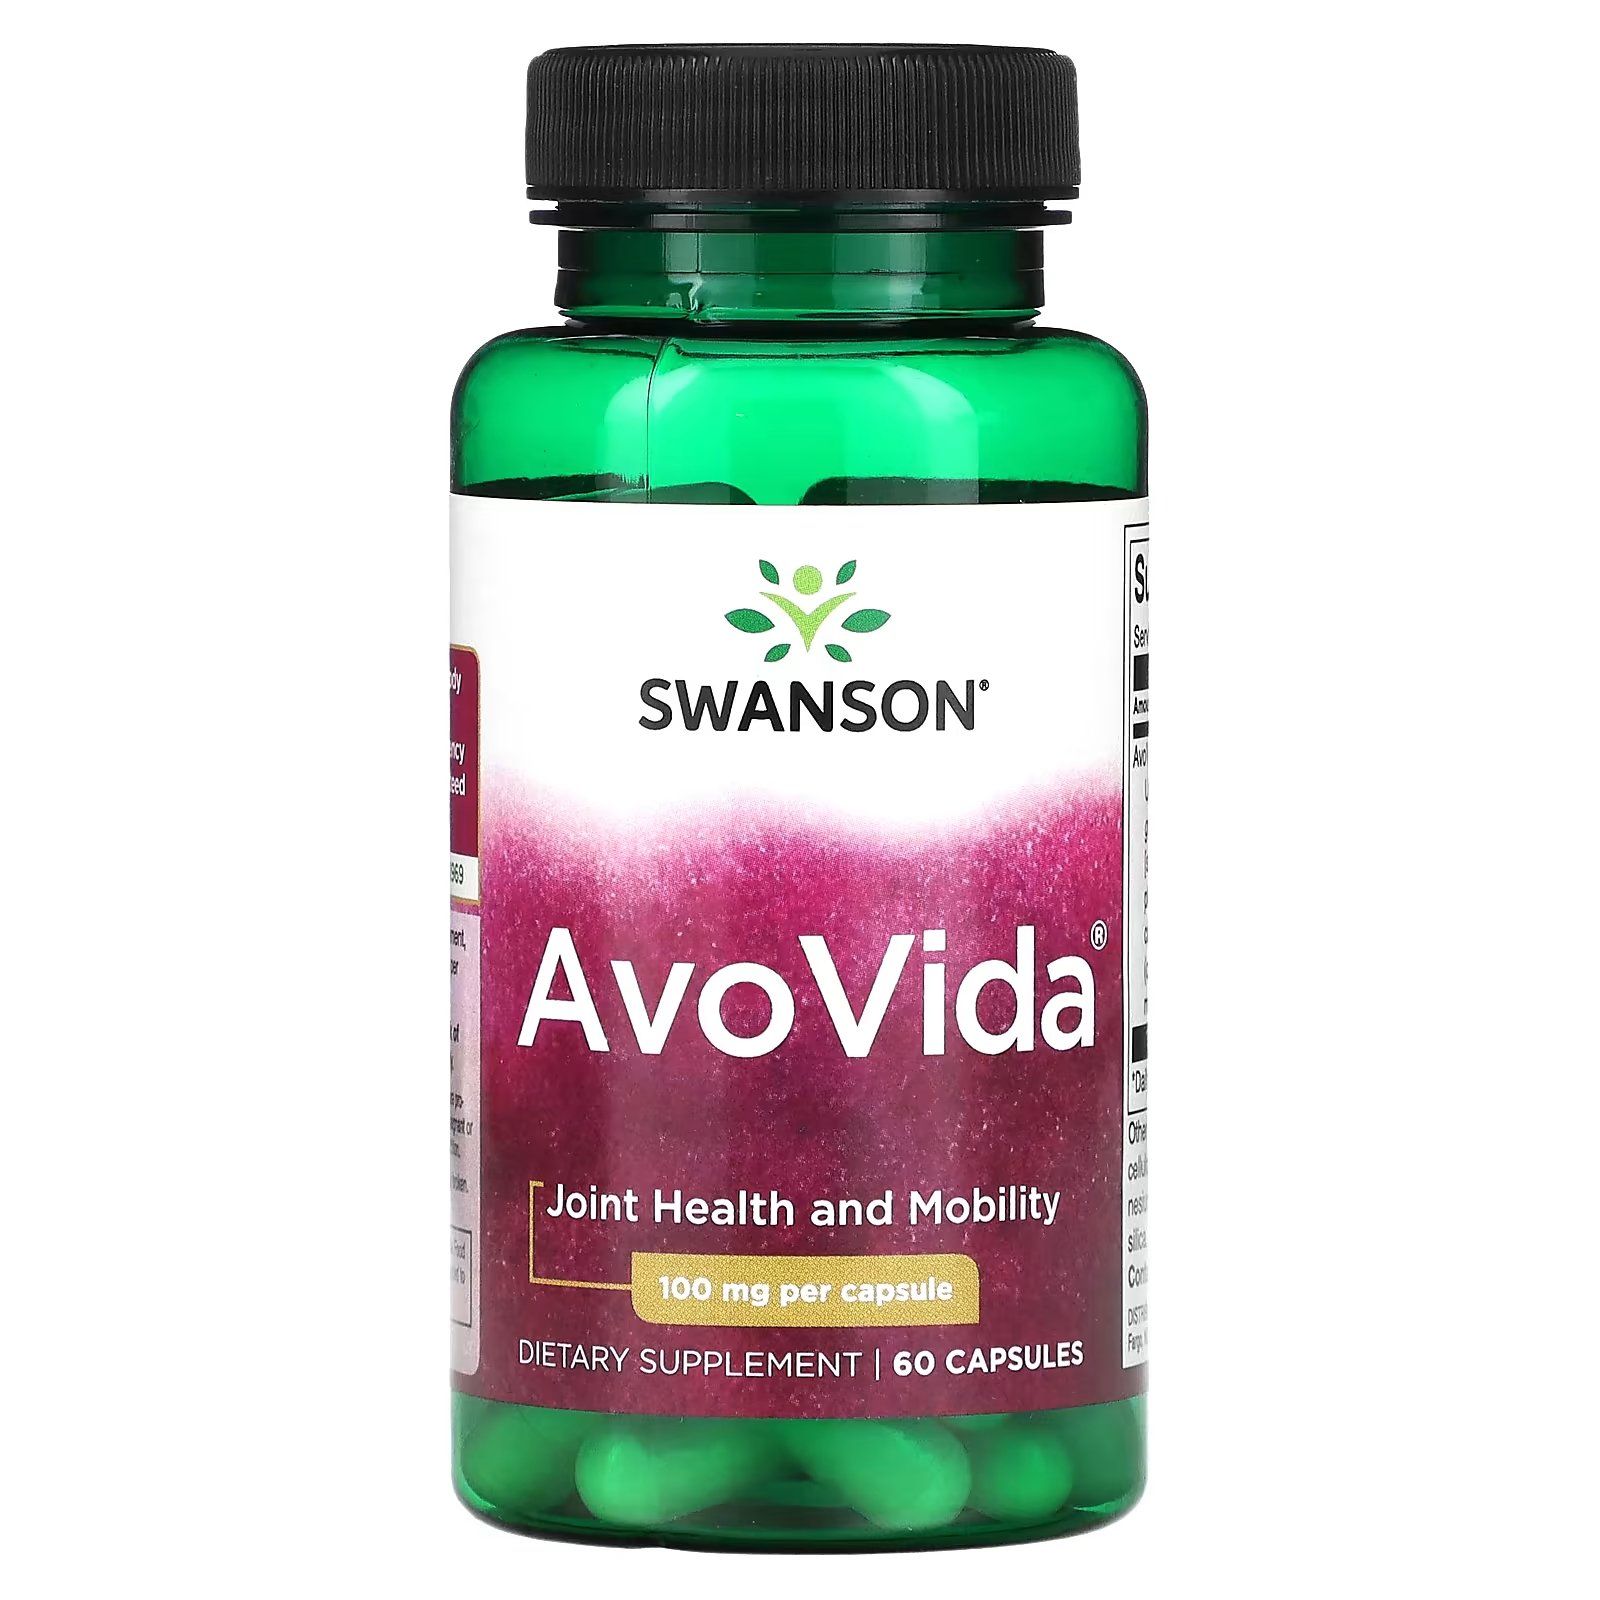 Пищевая добавка Swanson AvoVida с авакадо, 60 капсул пищевая добавка swanson здоровье и подвижность суставов 30 капсул